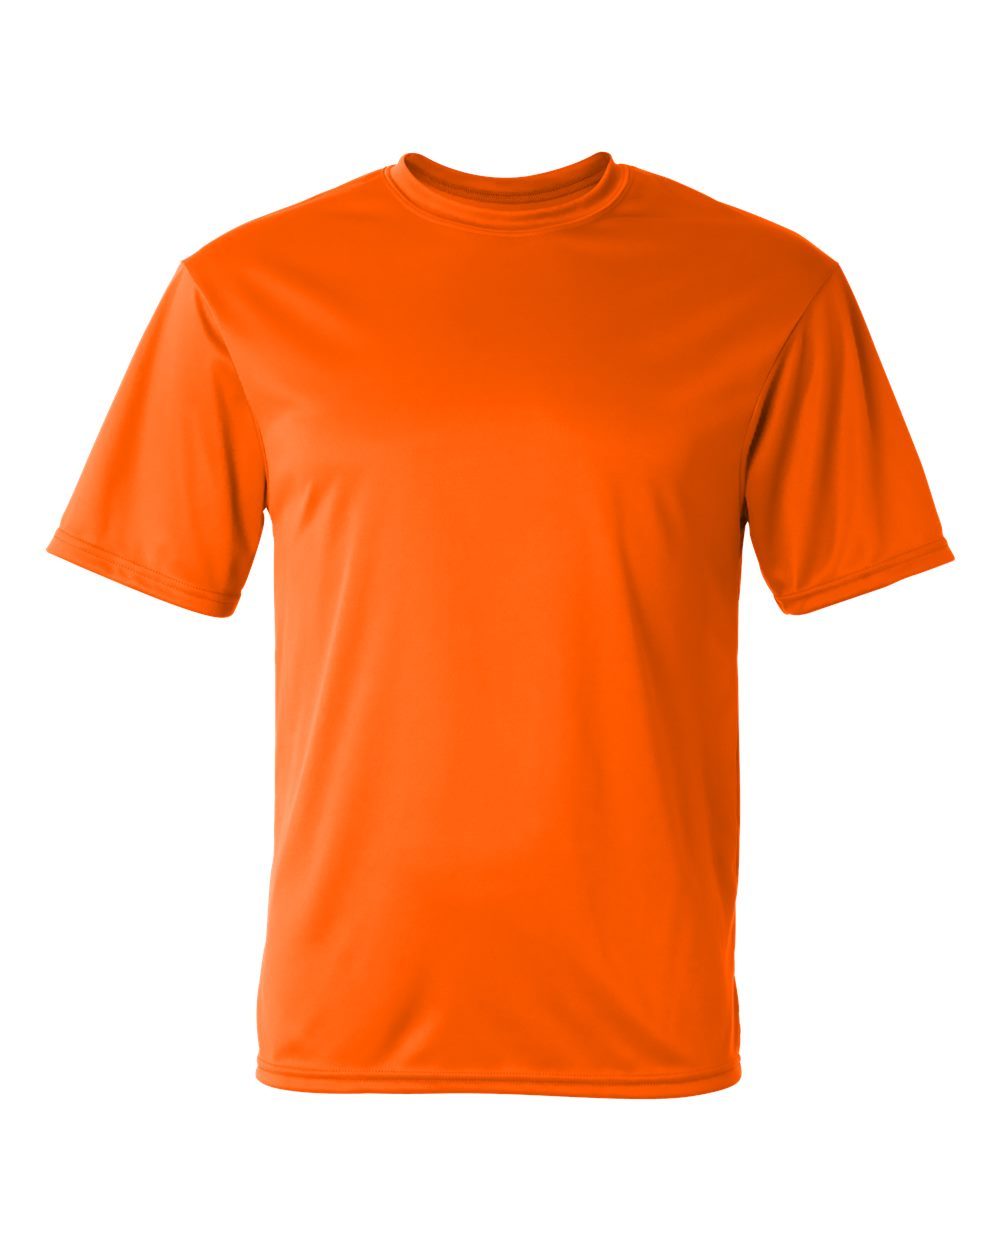 C2 Sport 5100 Performance Shirt :: Safety Orange, Size 2XL